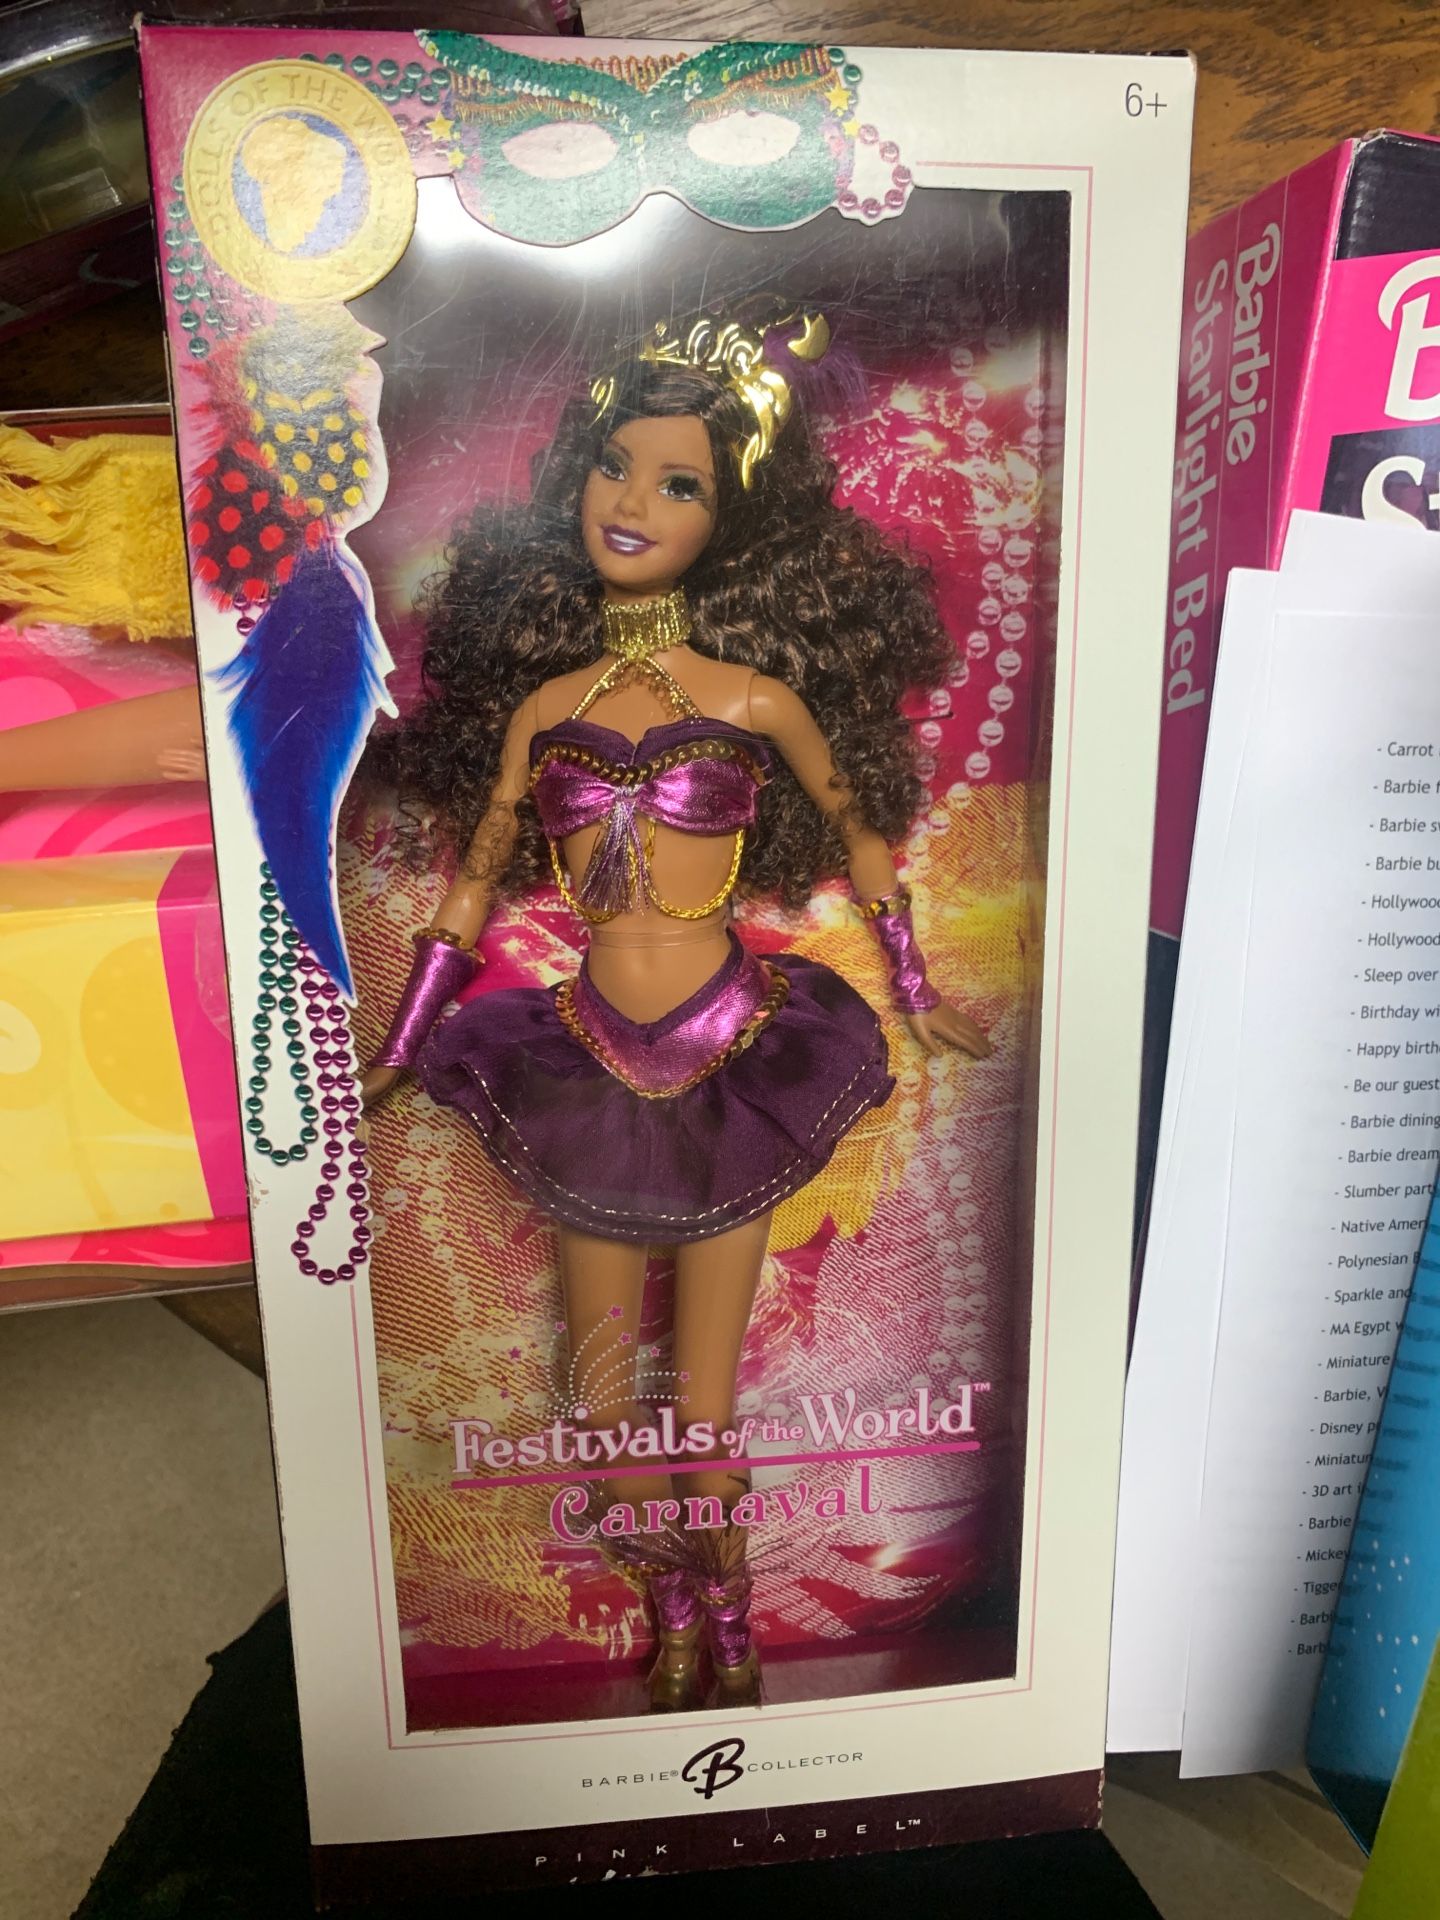 Festivals of the world carnaval Barbie